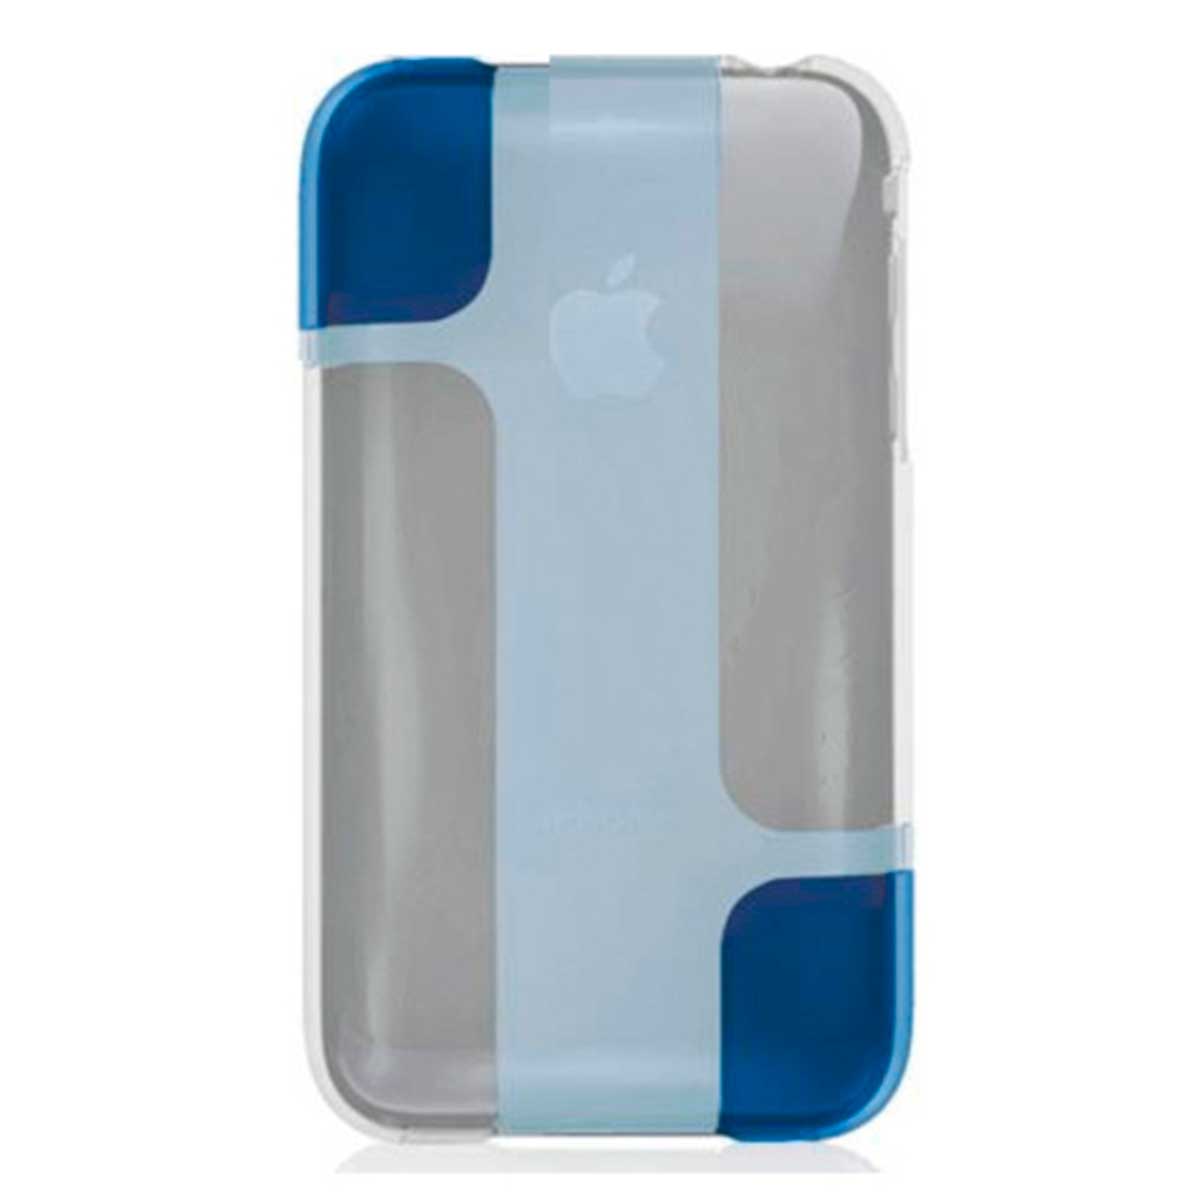 Capa para iPhone 3G - Belkin Hue - Acrilico Branco/Azul - F8Z455-047